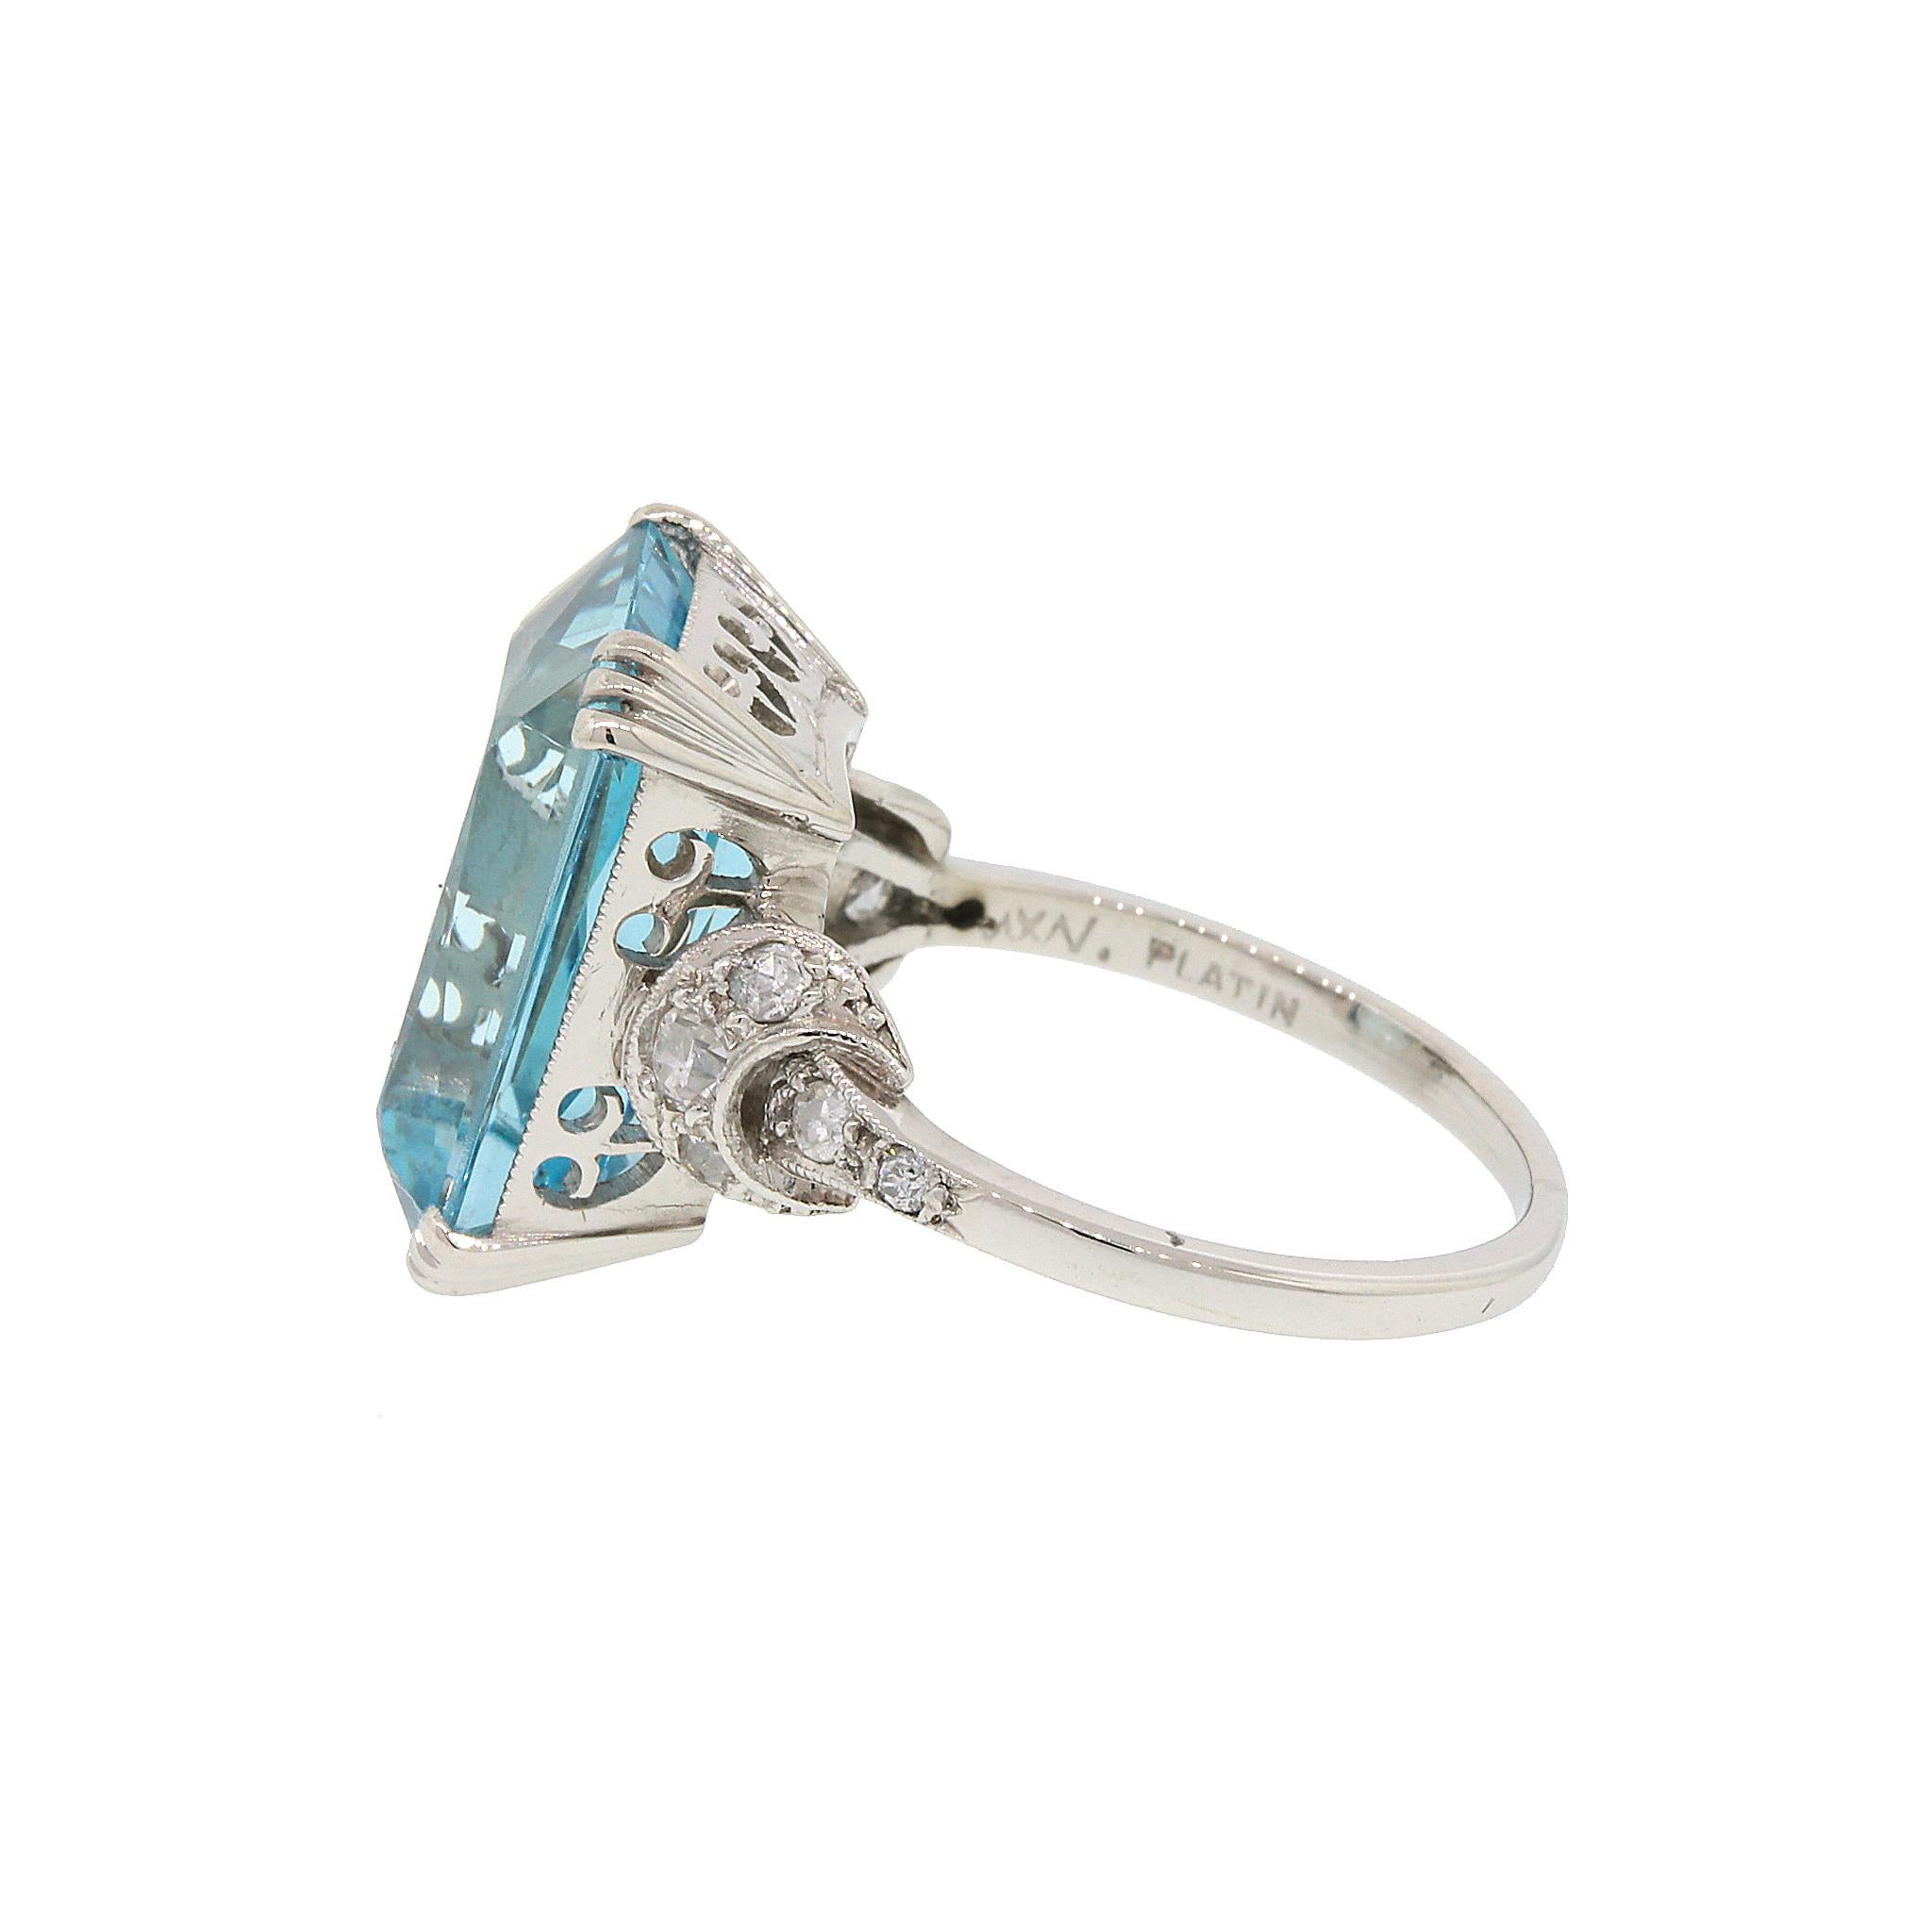 Emerald Cut Art Deco Aquamarine and Diamond Ring